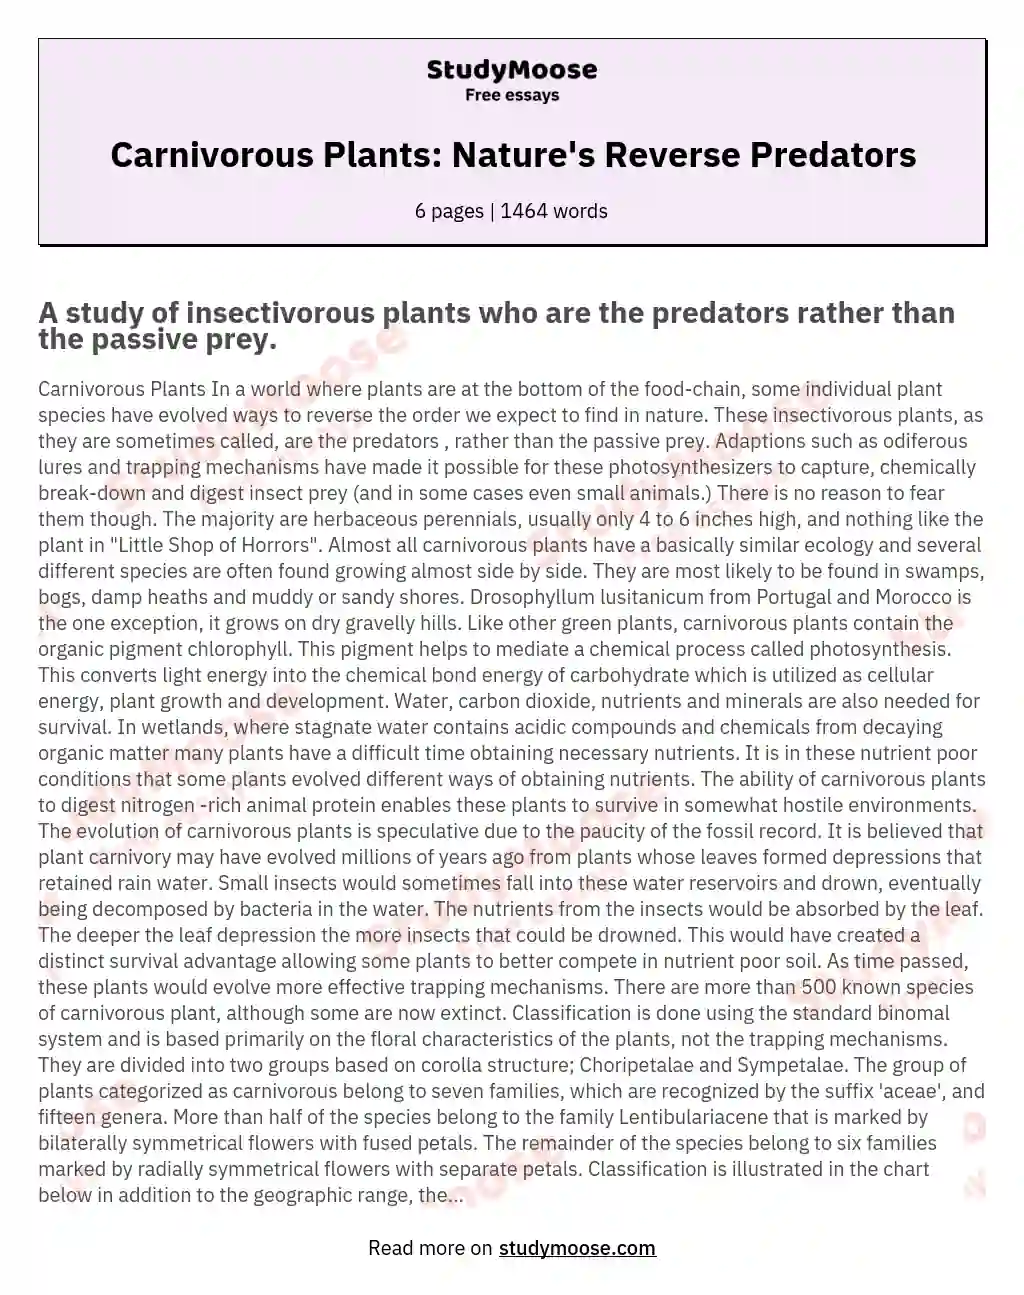 Carnivorous Plants: Nature's Reverse Predators essay